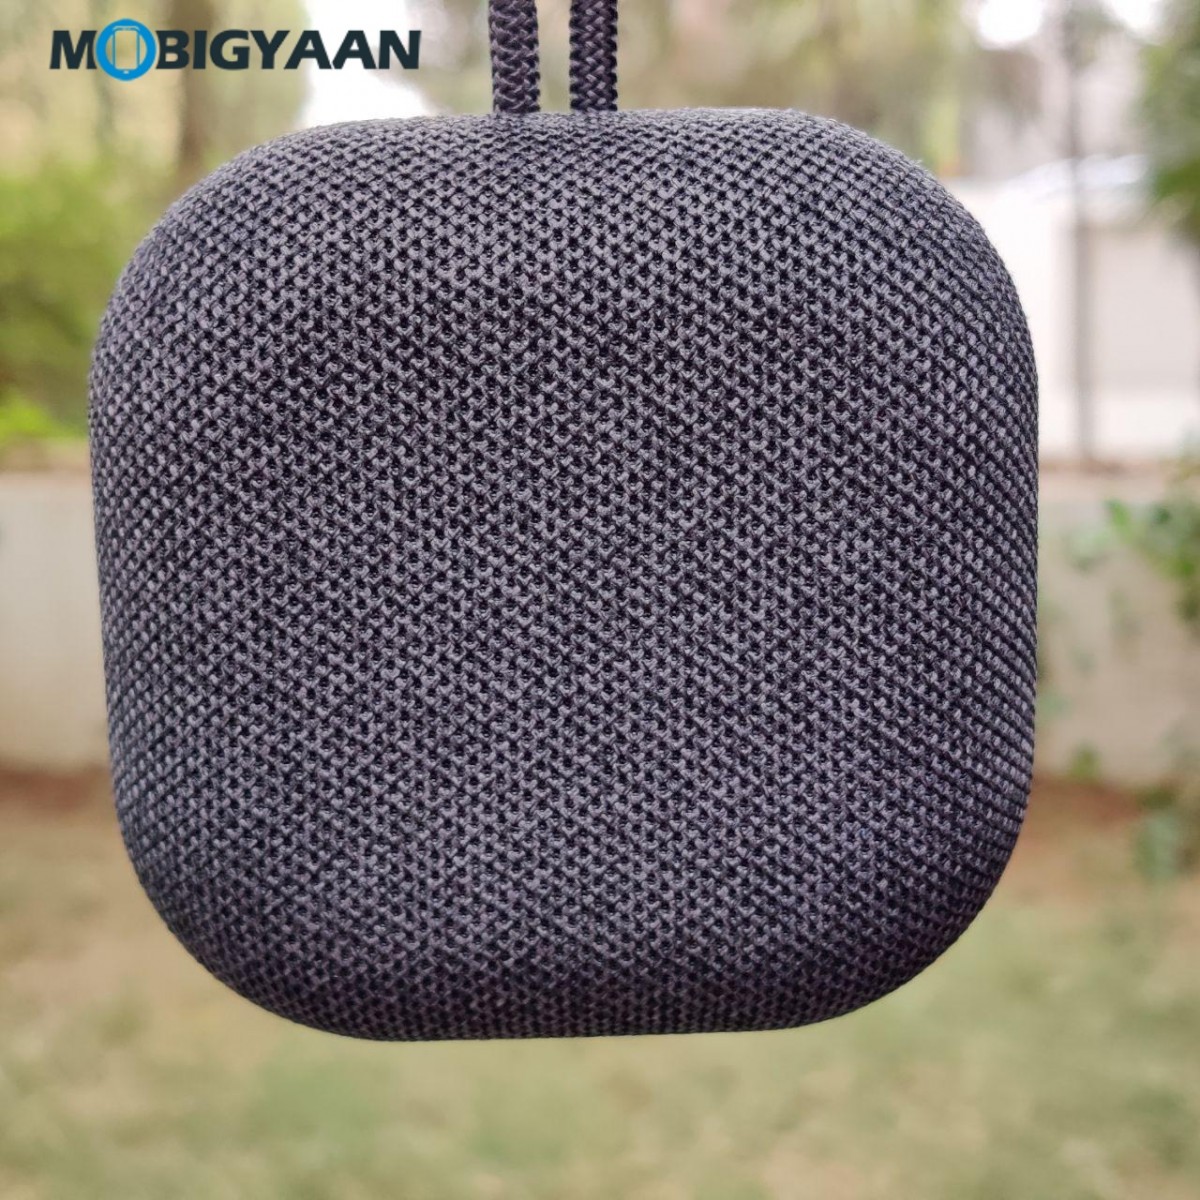 Mi Outdoor Bluetooth Speakers Hands On Review 2